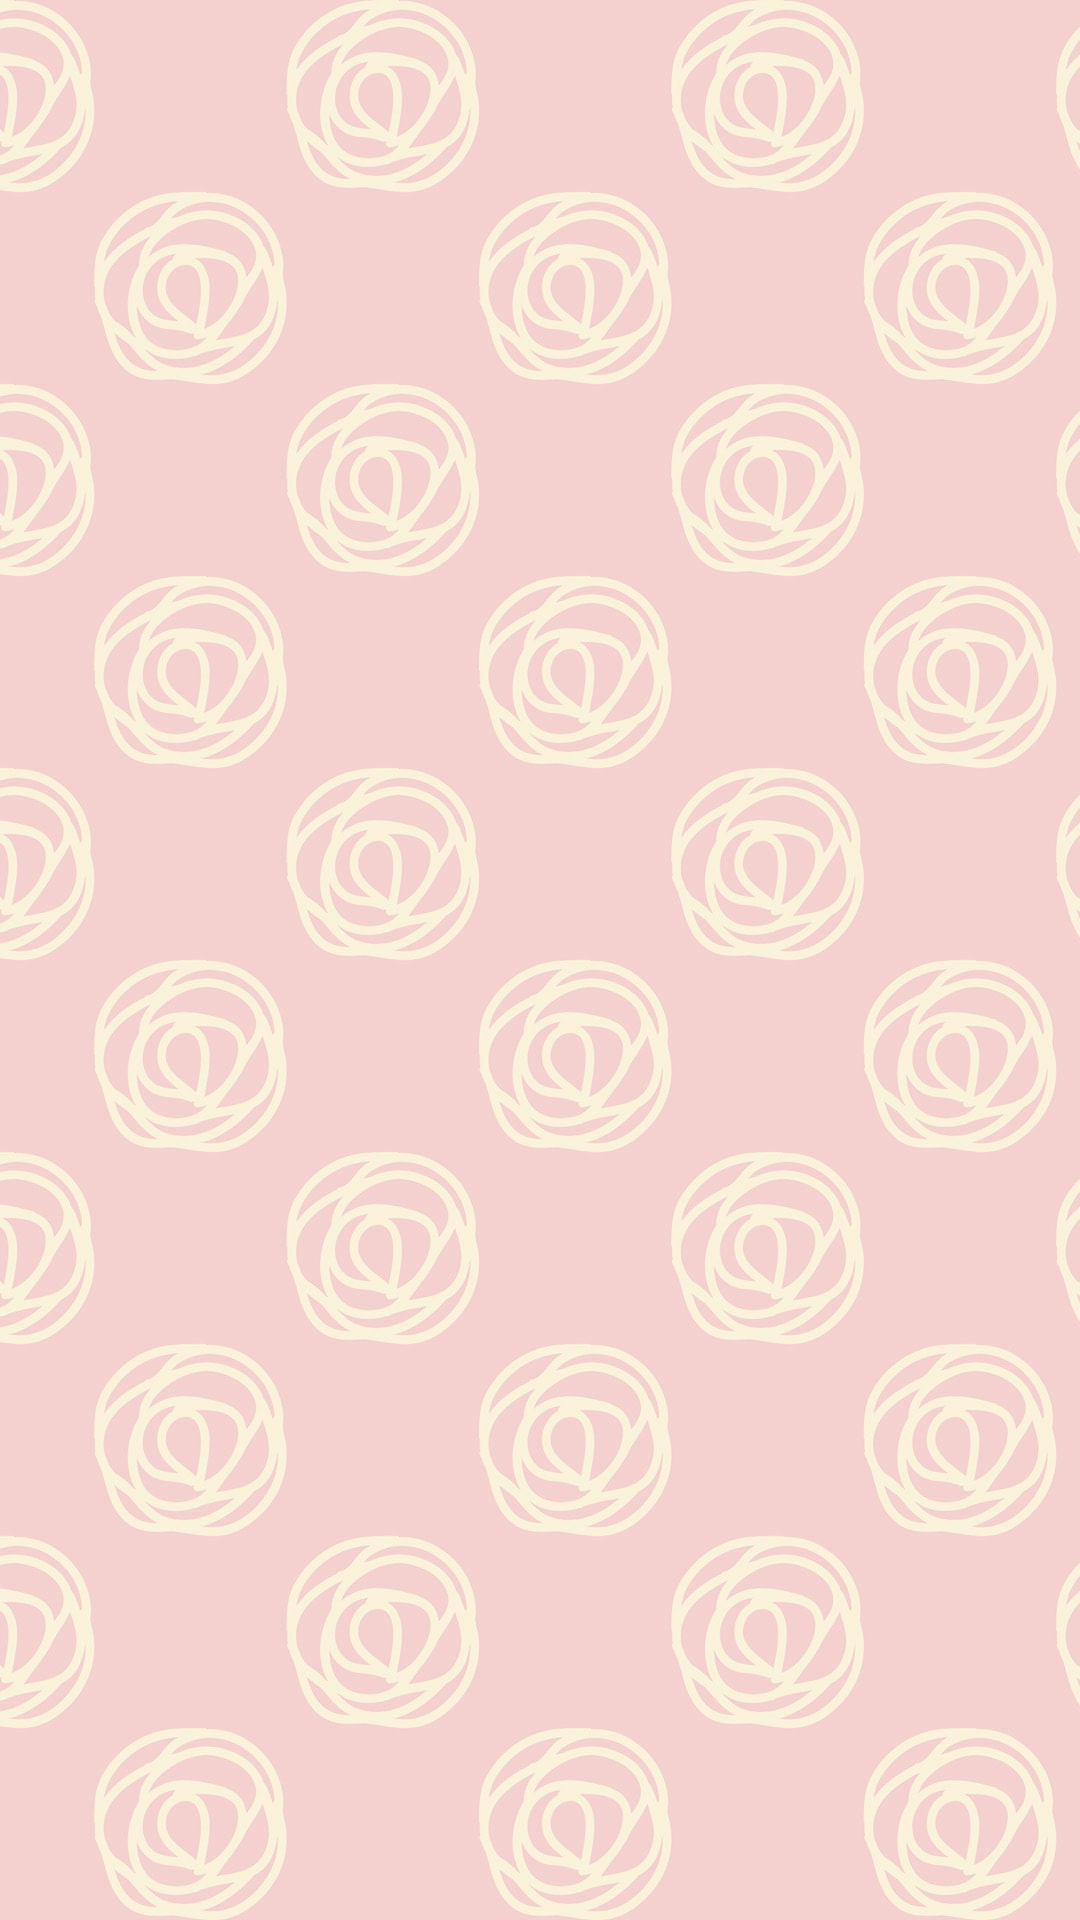 Cute Flower Pattern Iphone Wallpapers